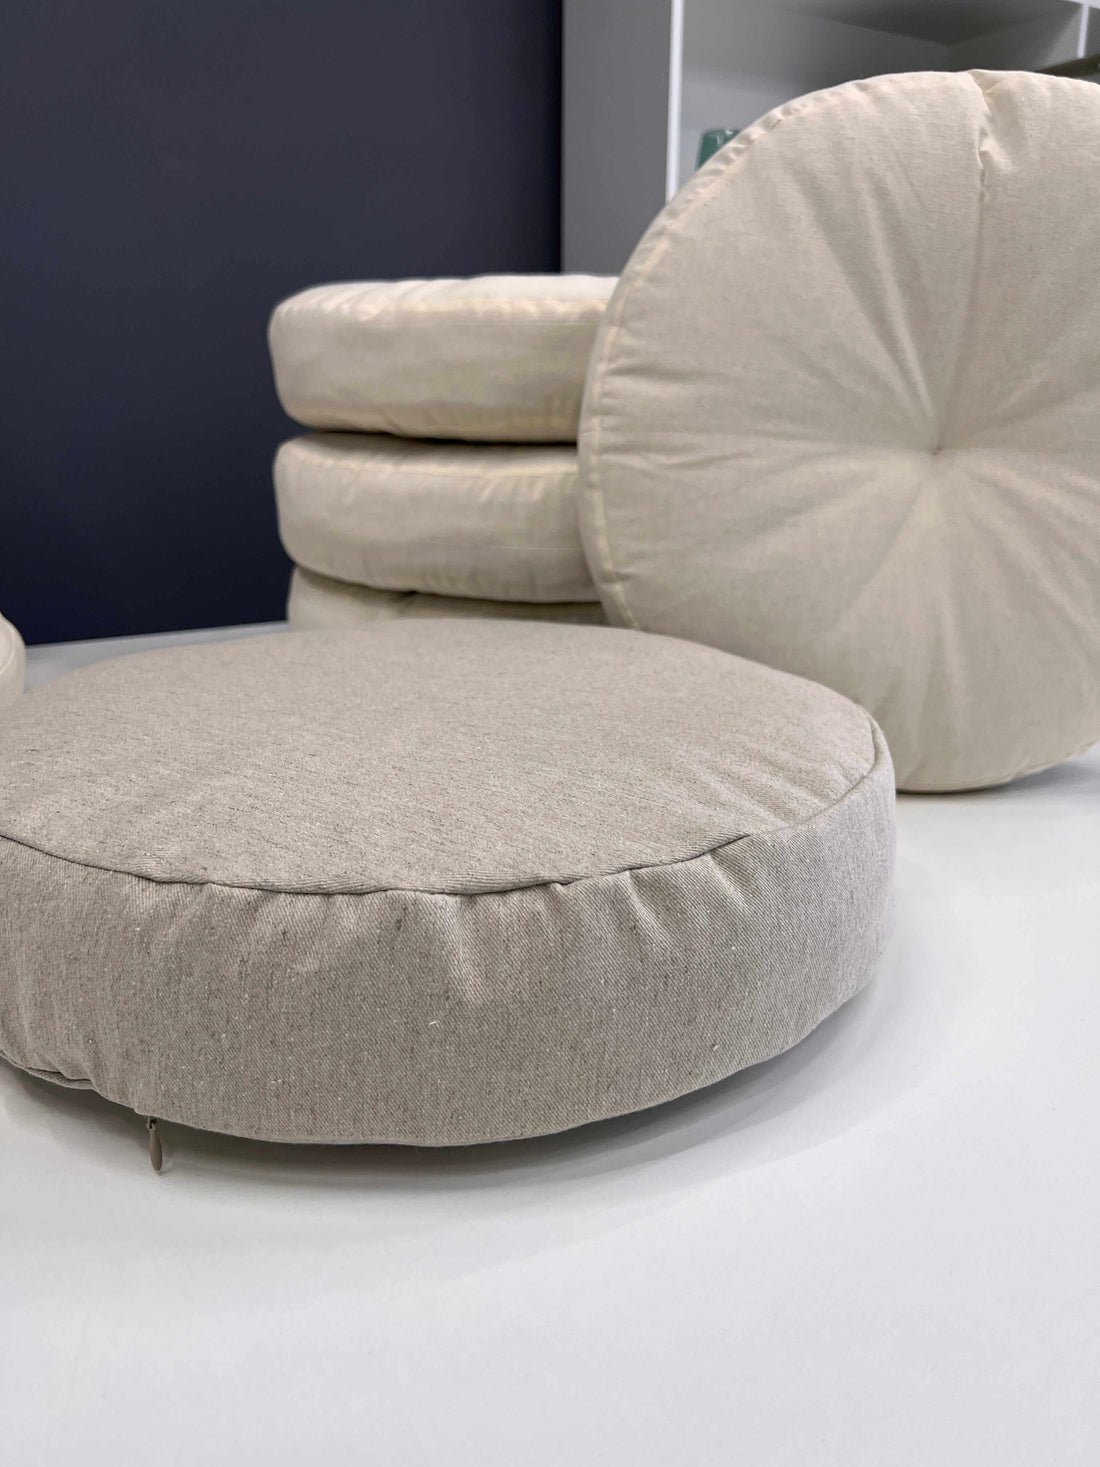 Unique Set of Hemp Floor Cushions: Two 49x29x7.8, Plus Back Cushions of  49x16x7.8 and 29x16x7.8 With Organic Hemp Fiber Filling 